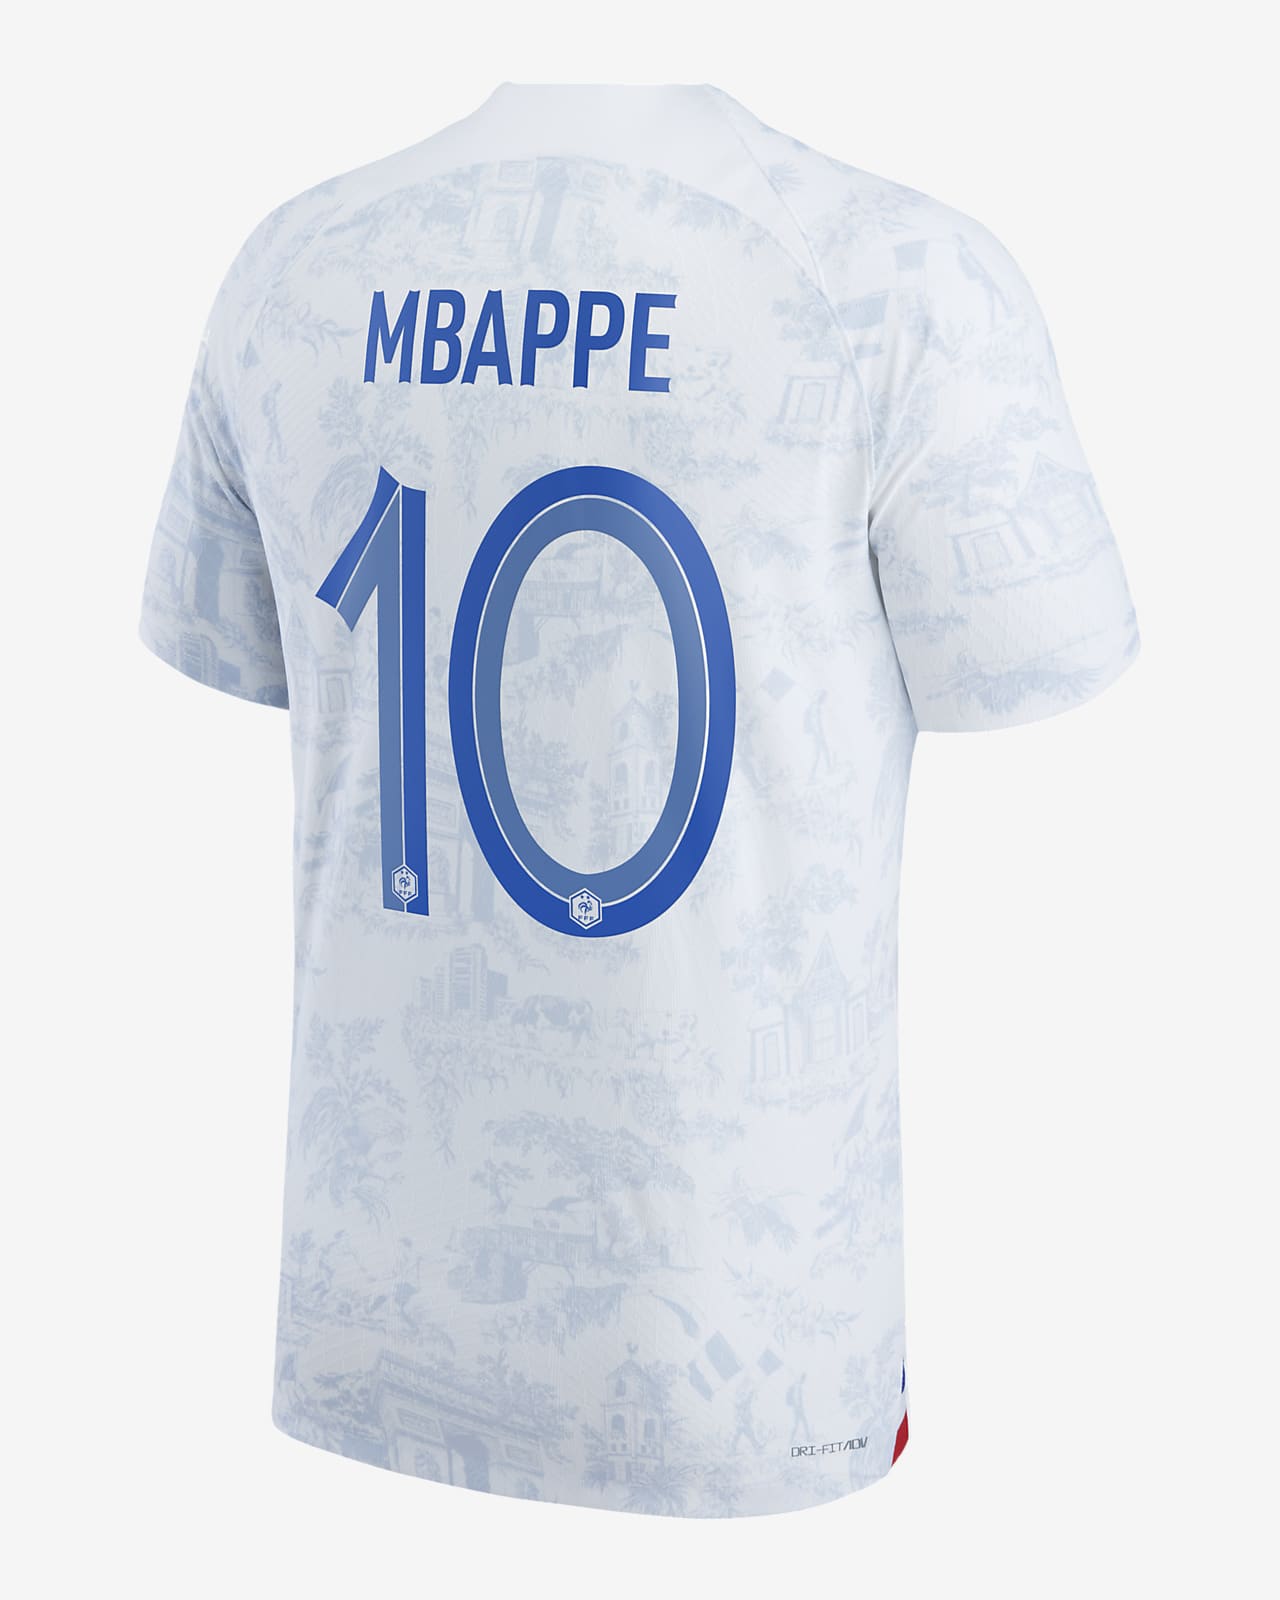 France National Team 2022/23 Vapor Match Mbappe) Men's Nike Dri-FIT ADV Jersey.